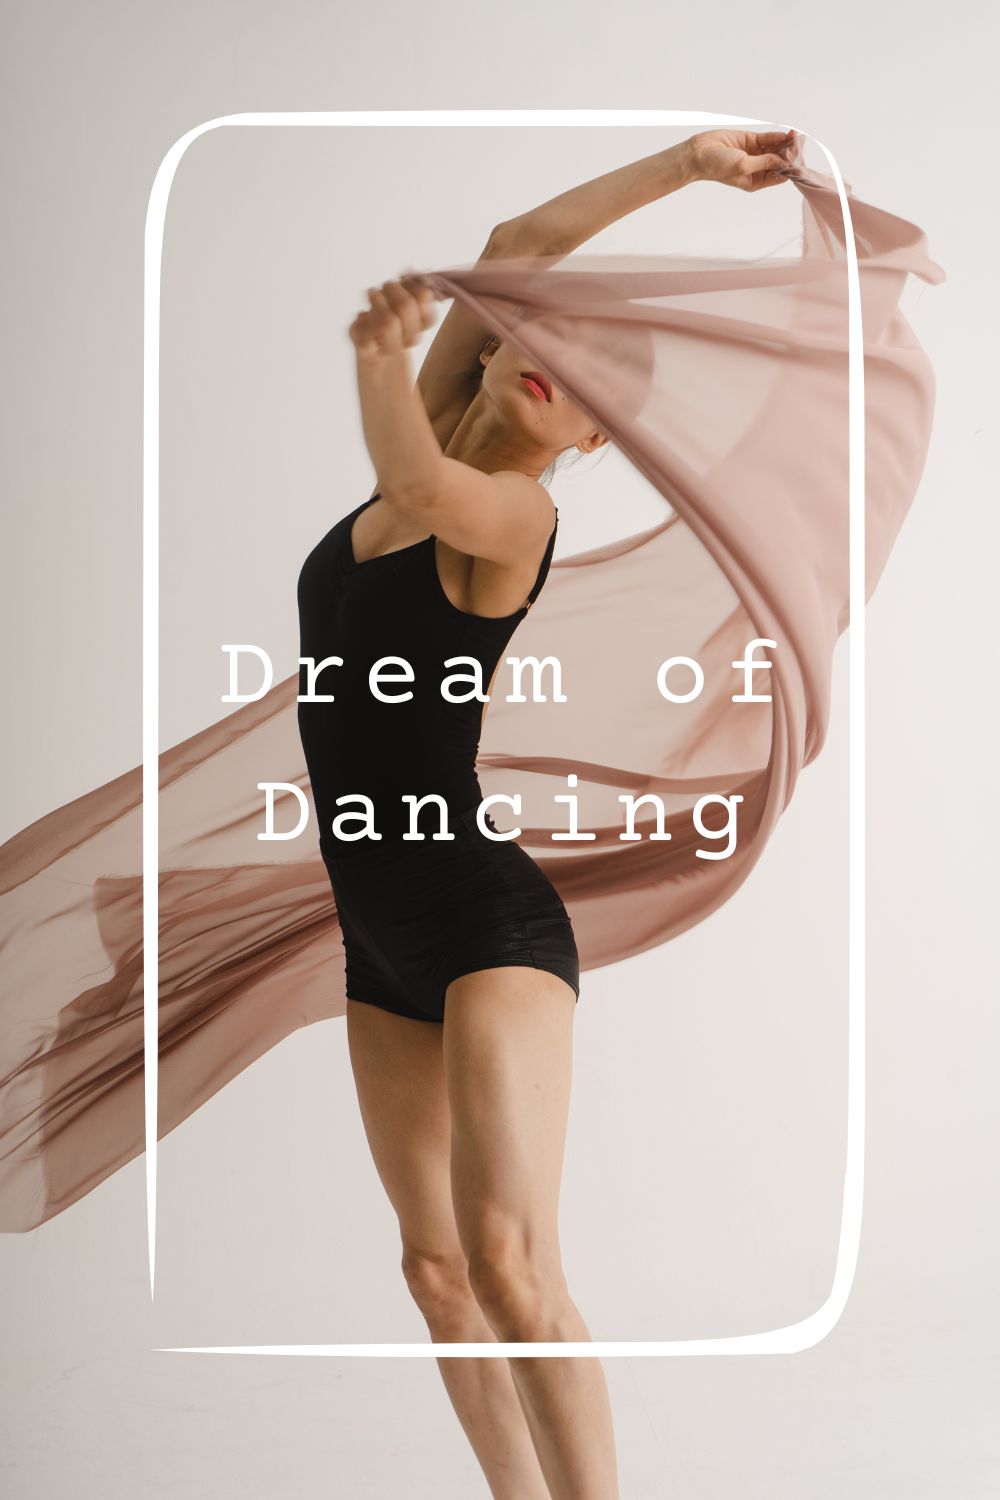 11 Dream of Dancing Meanings4